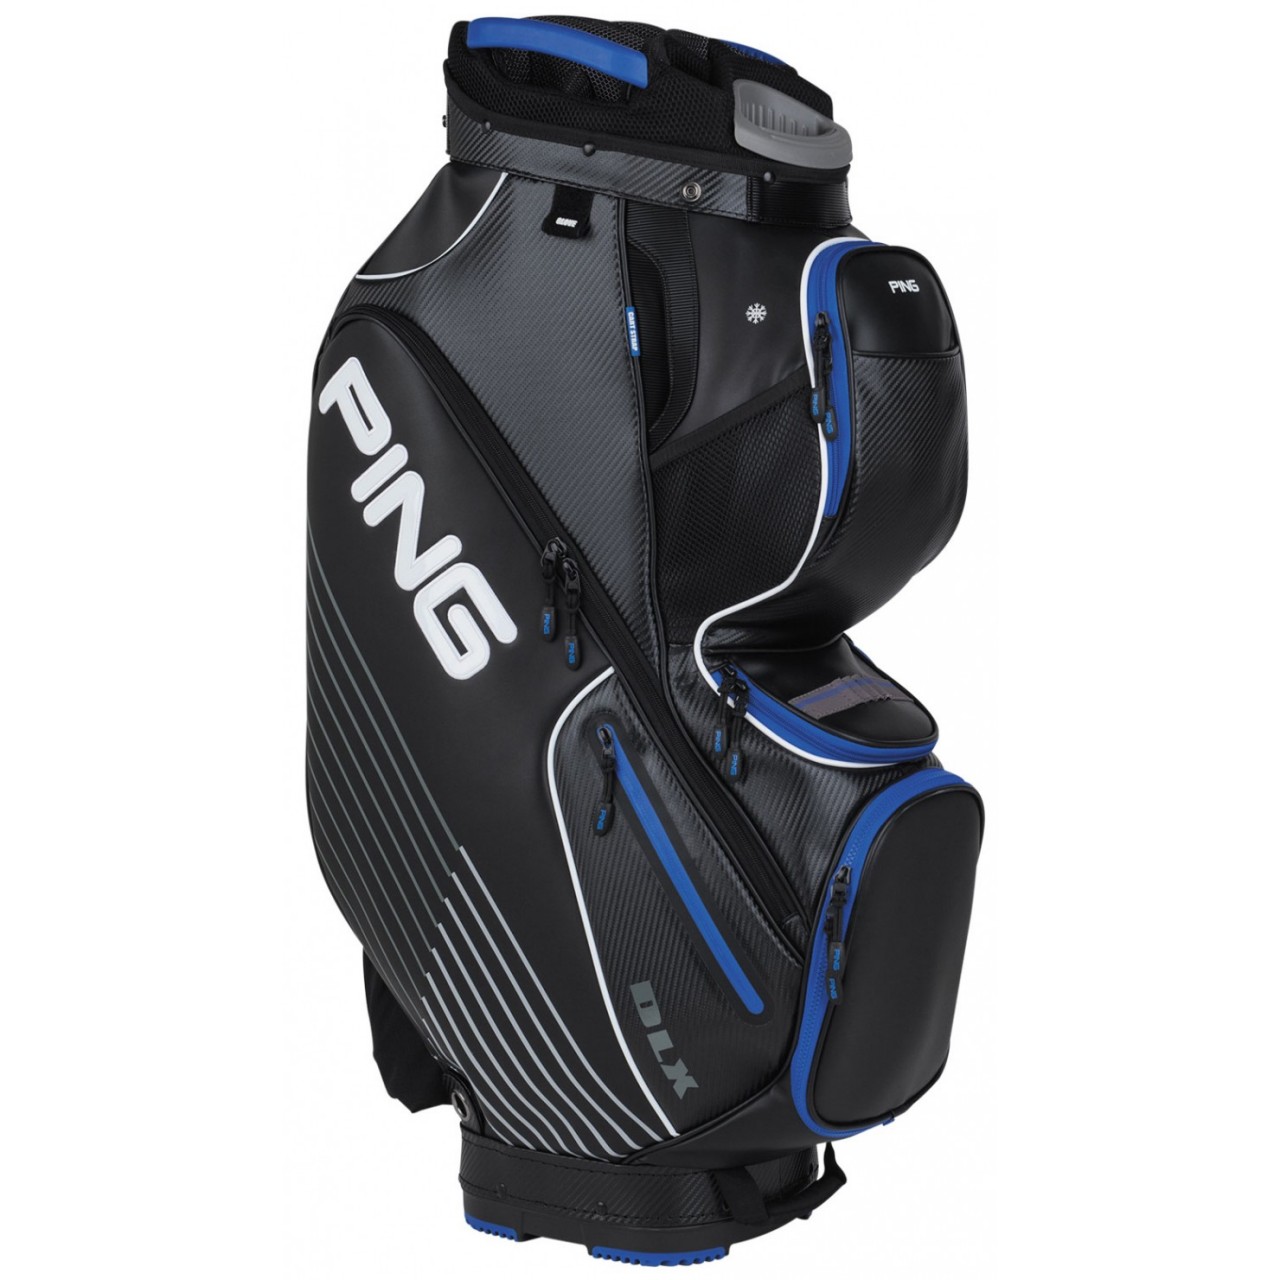 PING DLX CART BAG BLACK/BLUE - Golf Factory Outlet